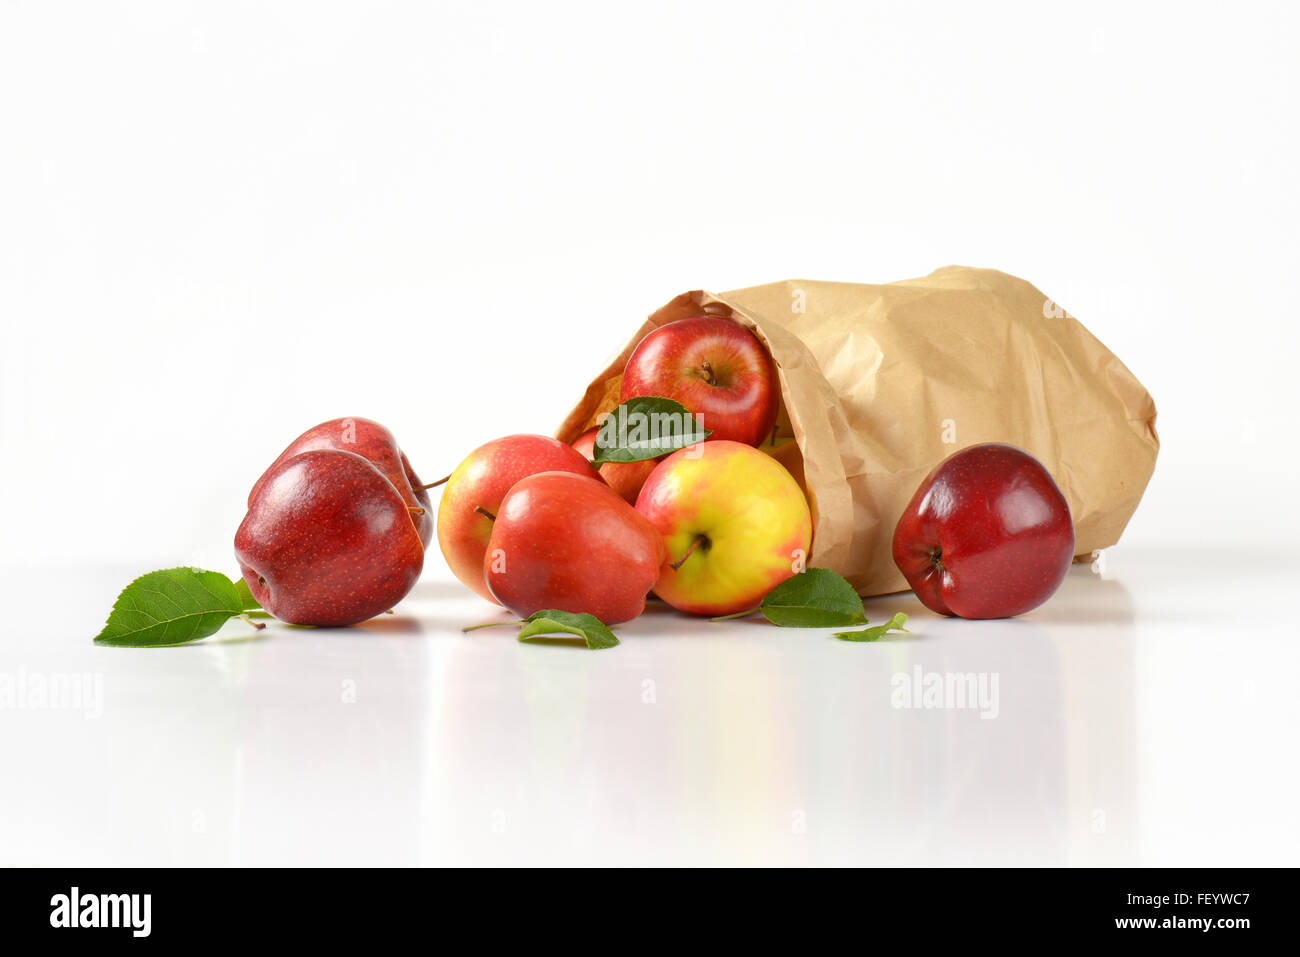 https://c8.alamy.com/comp/FEYWC7/paper-bag-of-ripe-apples-on-white-background-FEYWC7.jpg